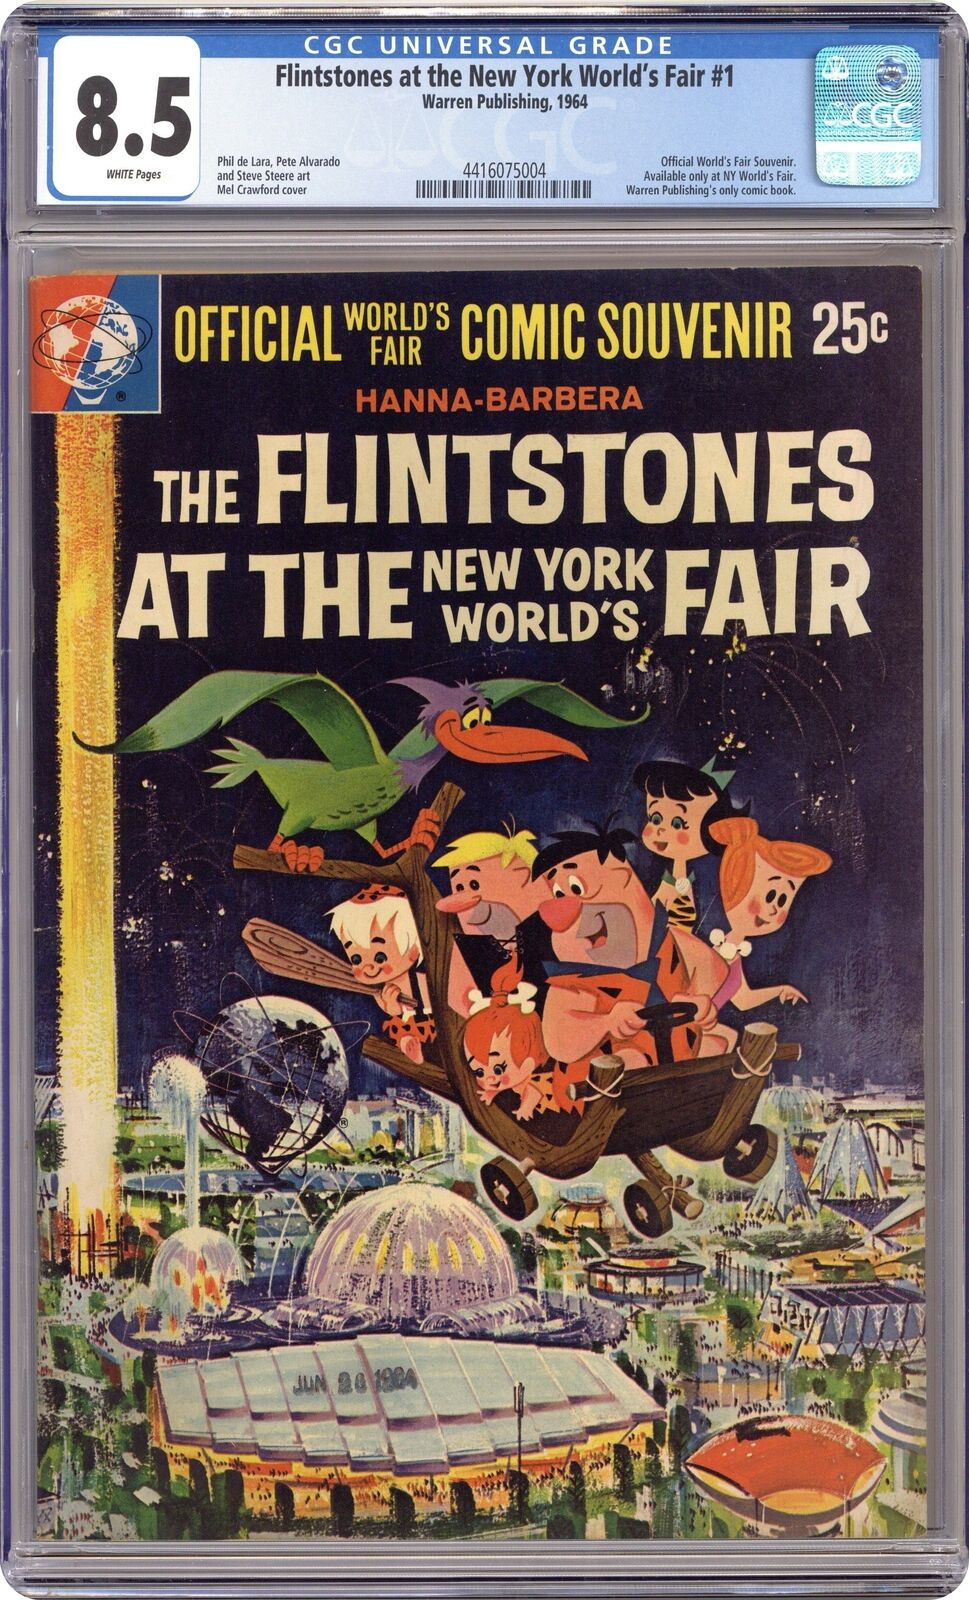 Flintstones at the New York\'s World Fair #1964 1st Printing CGC 8.5 4416075004